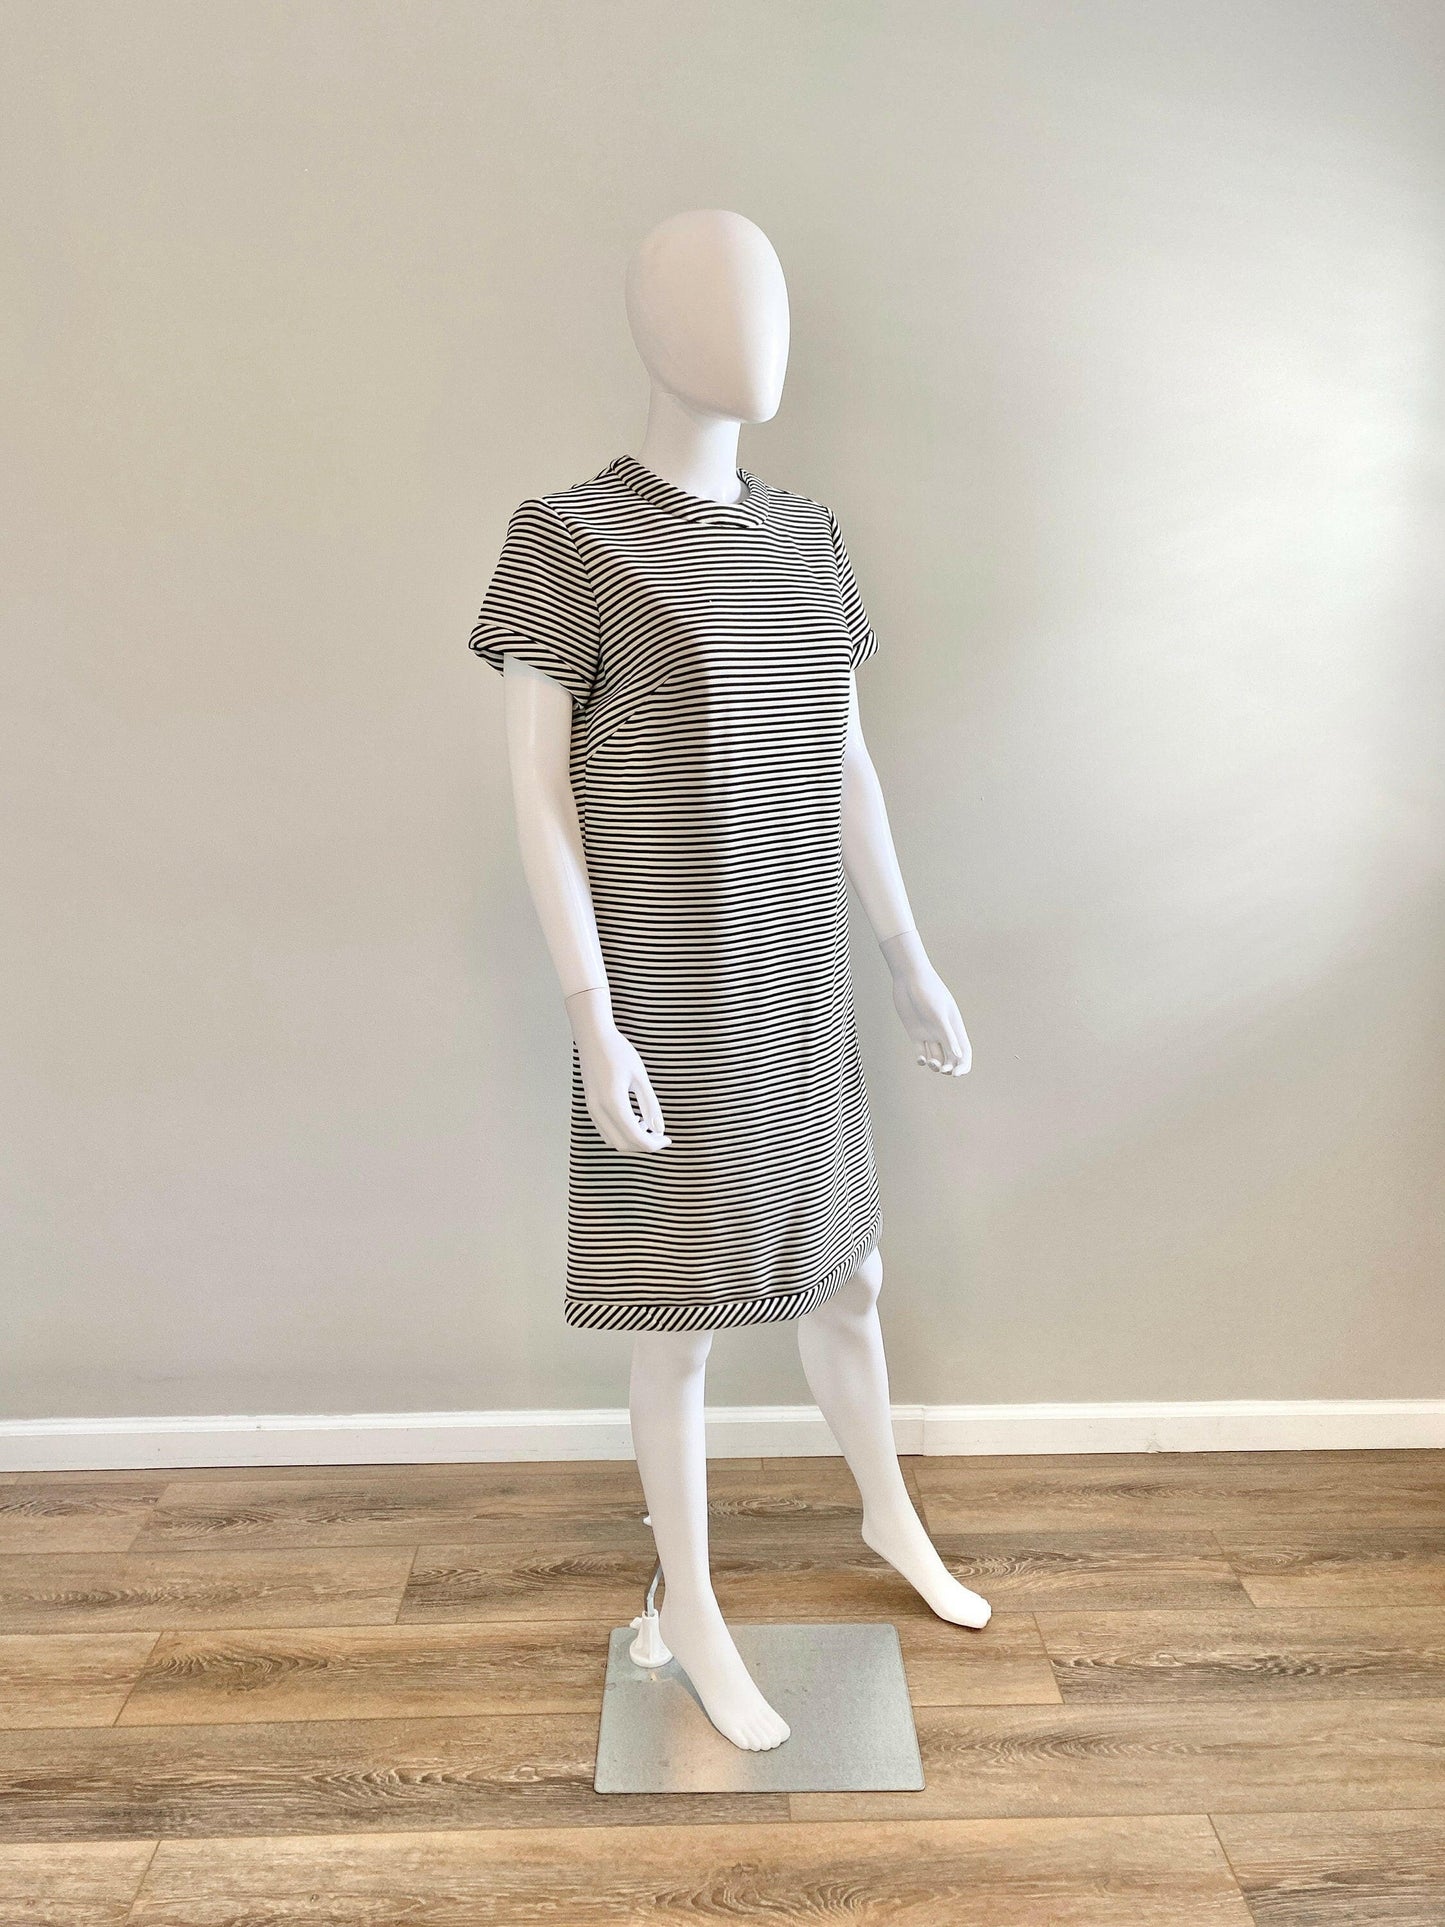 Vintage 1960s Black and White Striped Shift Dress / 60s retro Scooter Dress / Barbie core dress / Size S